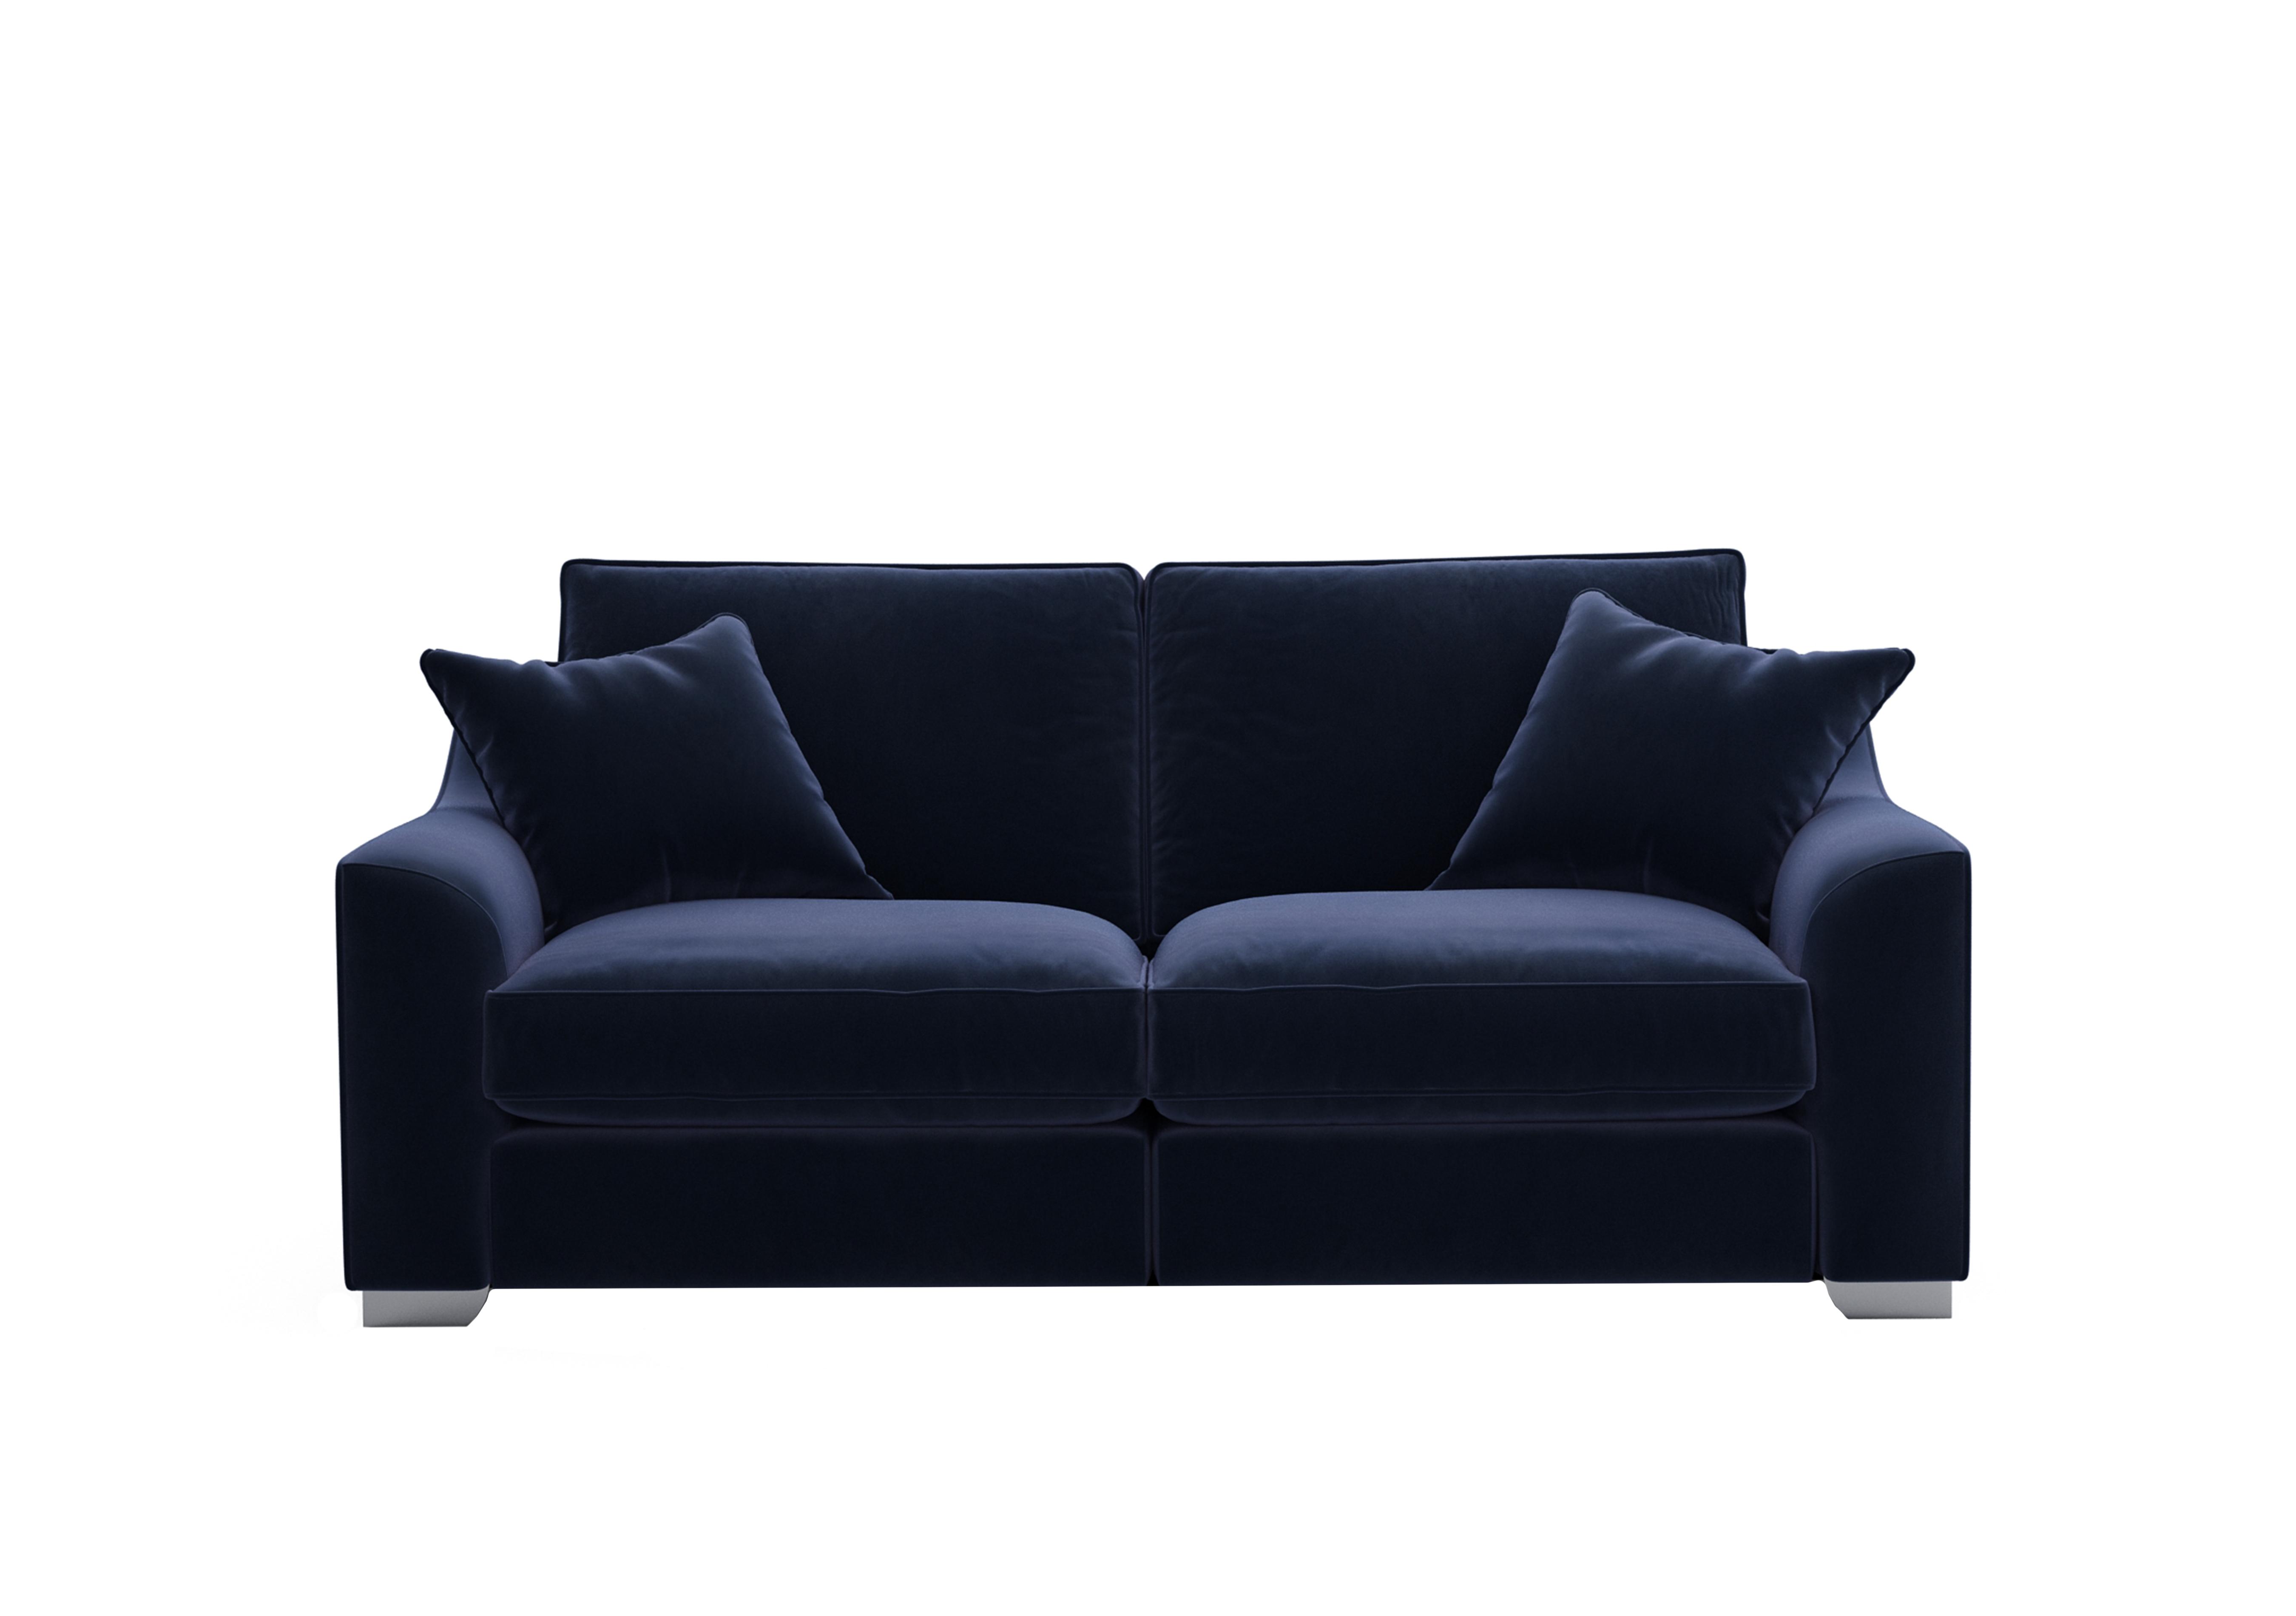 Isobel 3 Seater Fabric Sofa in Mid009 Midnight Indigo Ch Ft on Furniture Village